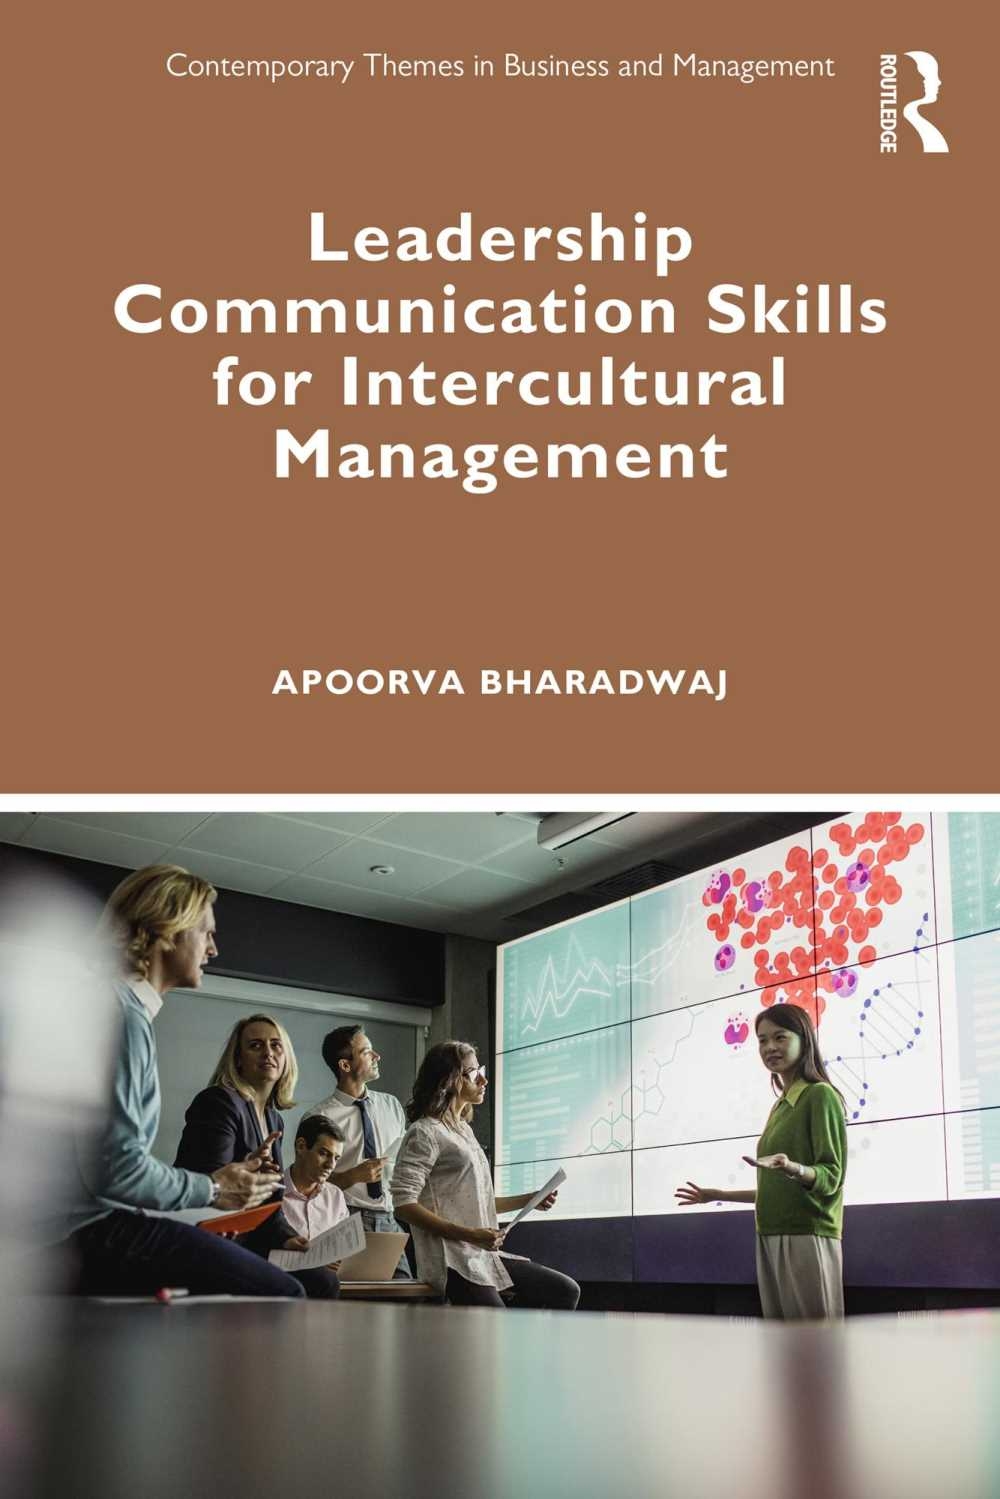 Communication Skills for Global Leadership: Strategies for Effective Intercultural Management